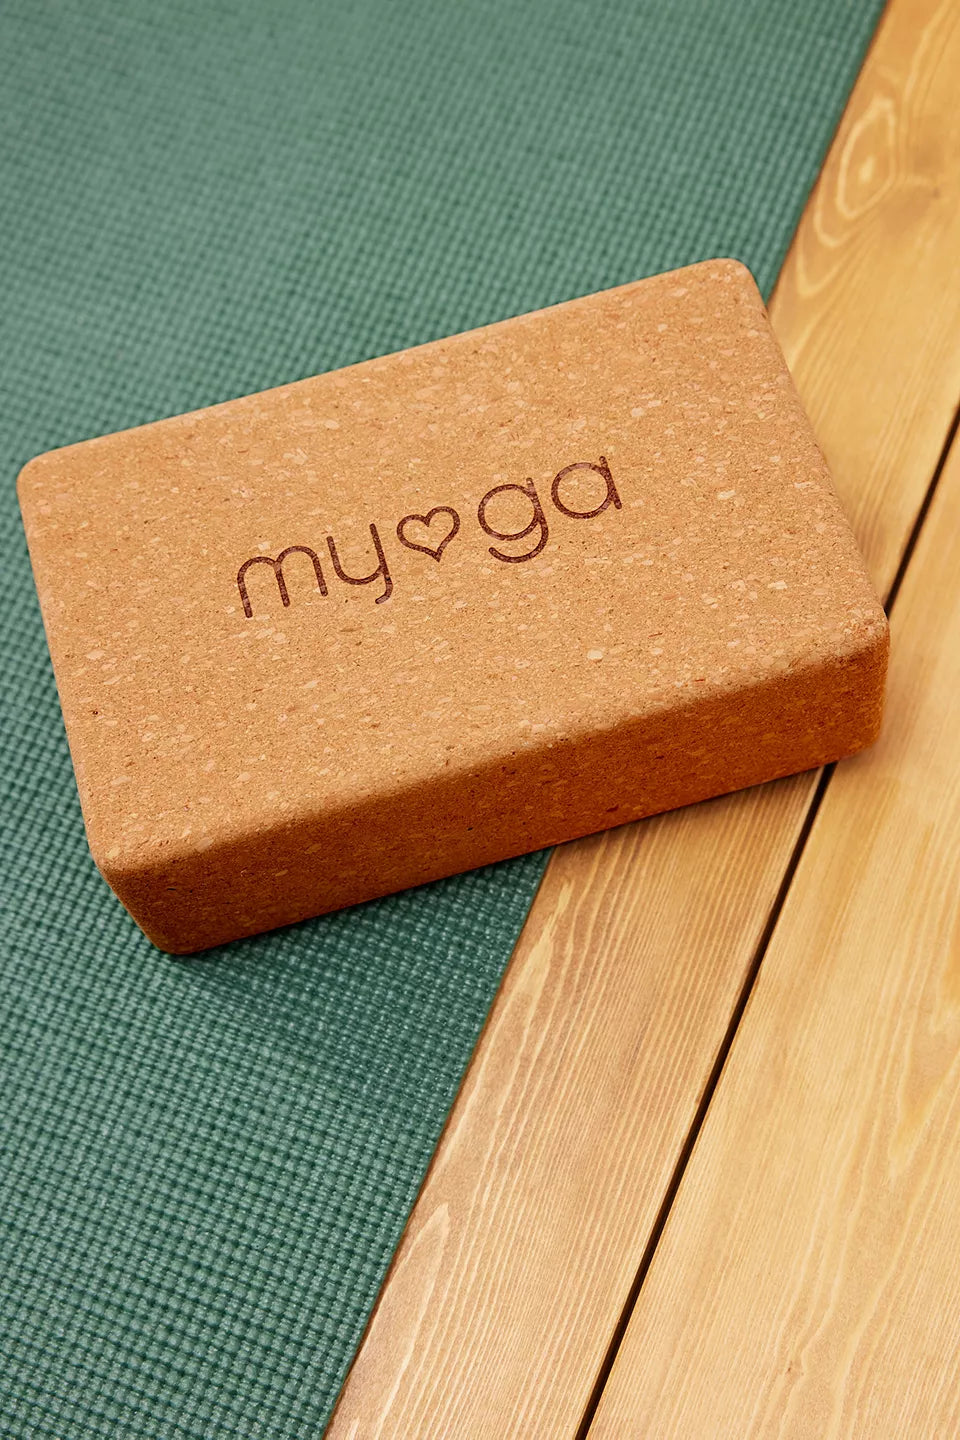 Myga yoga cork block